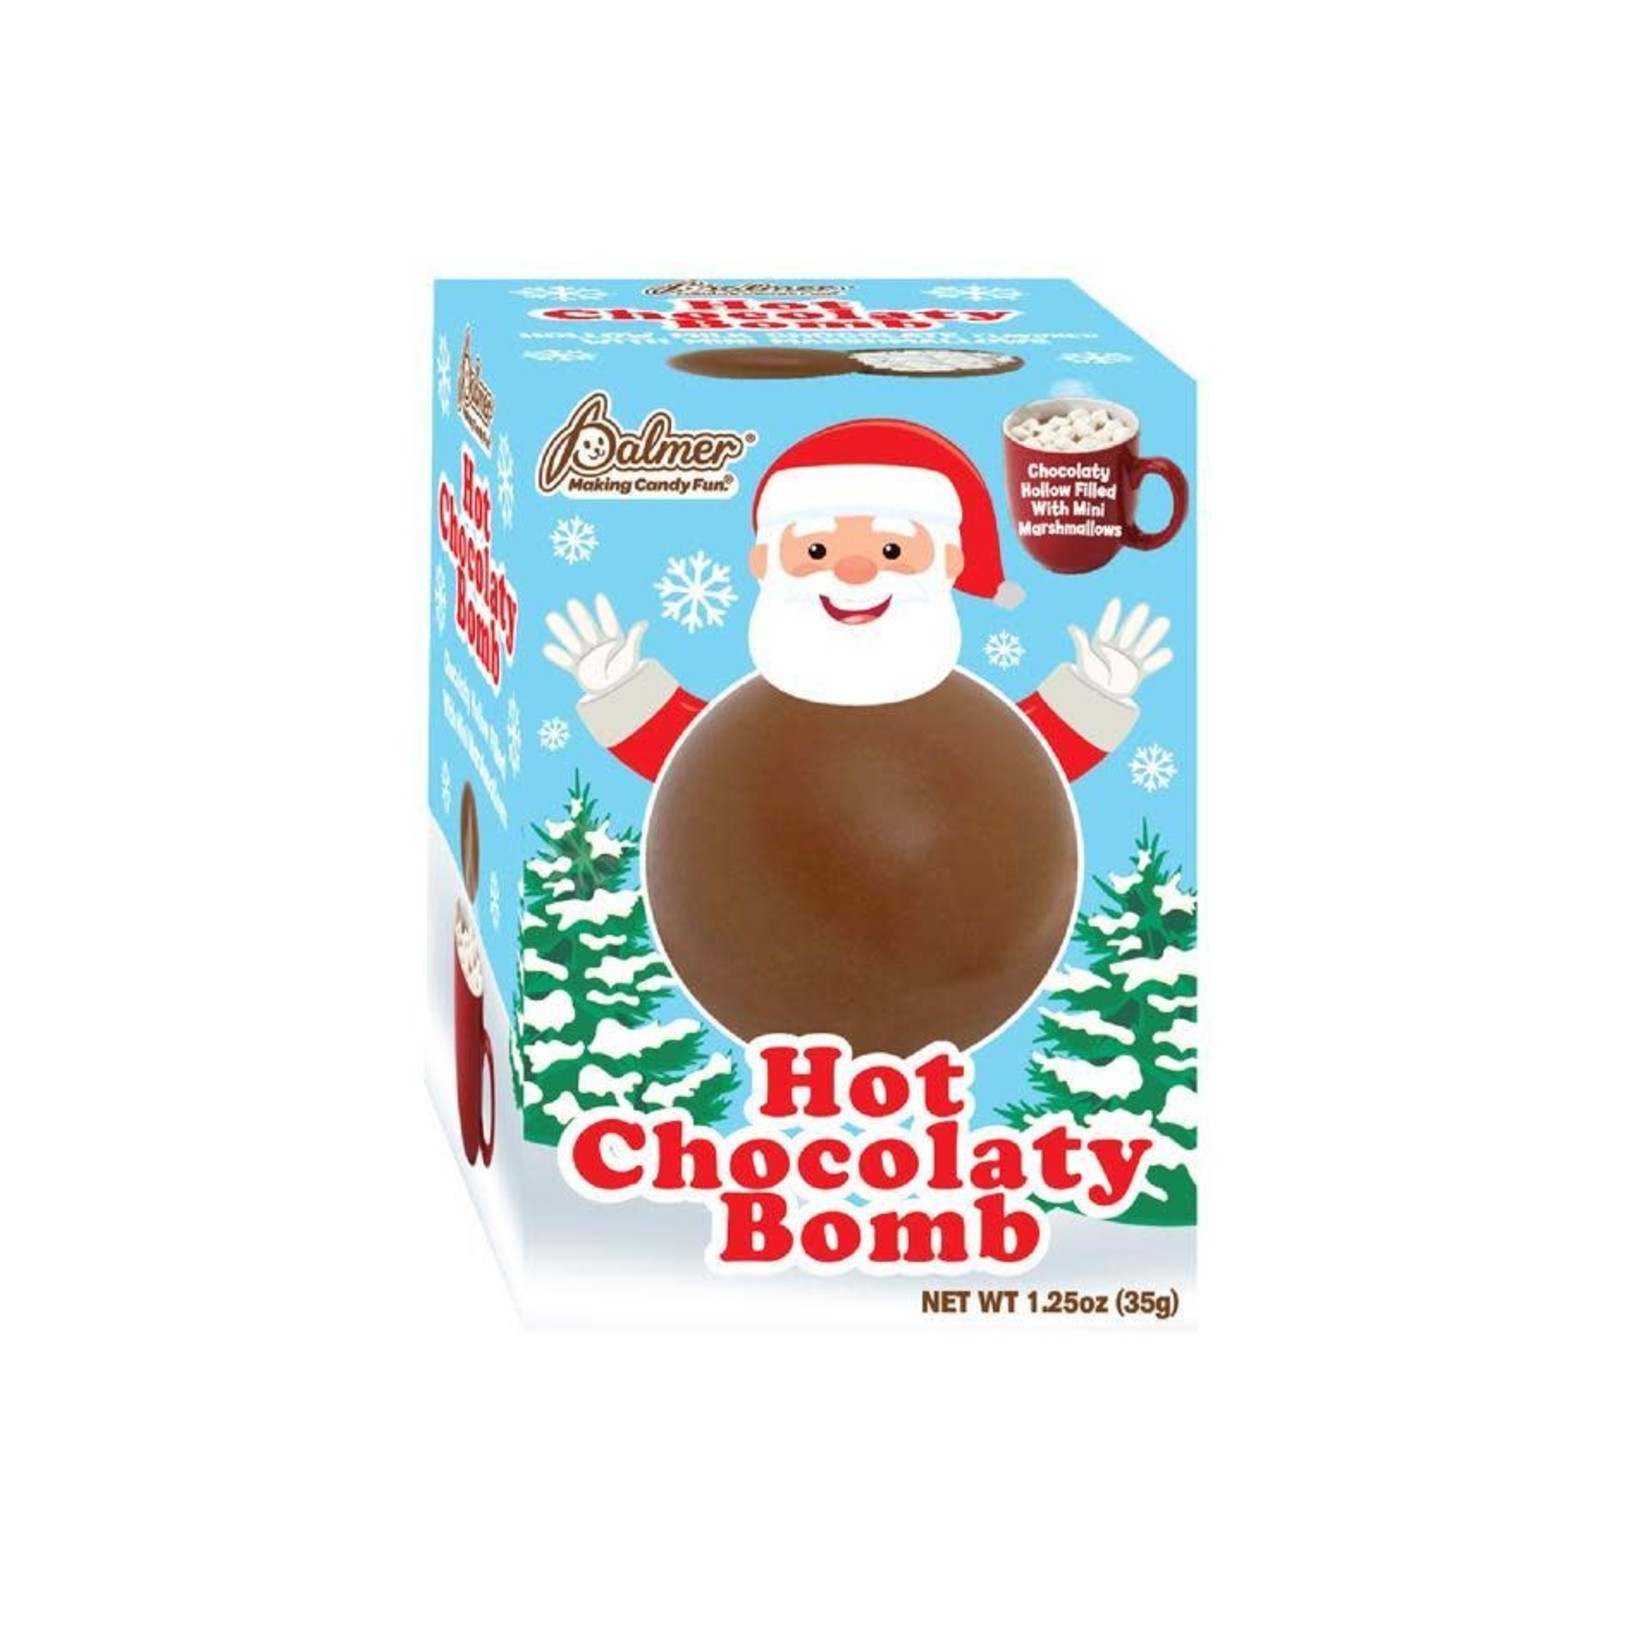 HOT CHOCOLATE BOMB